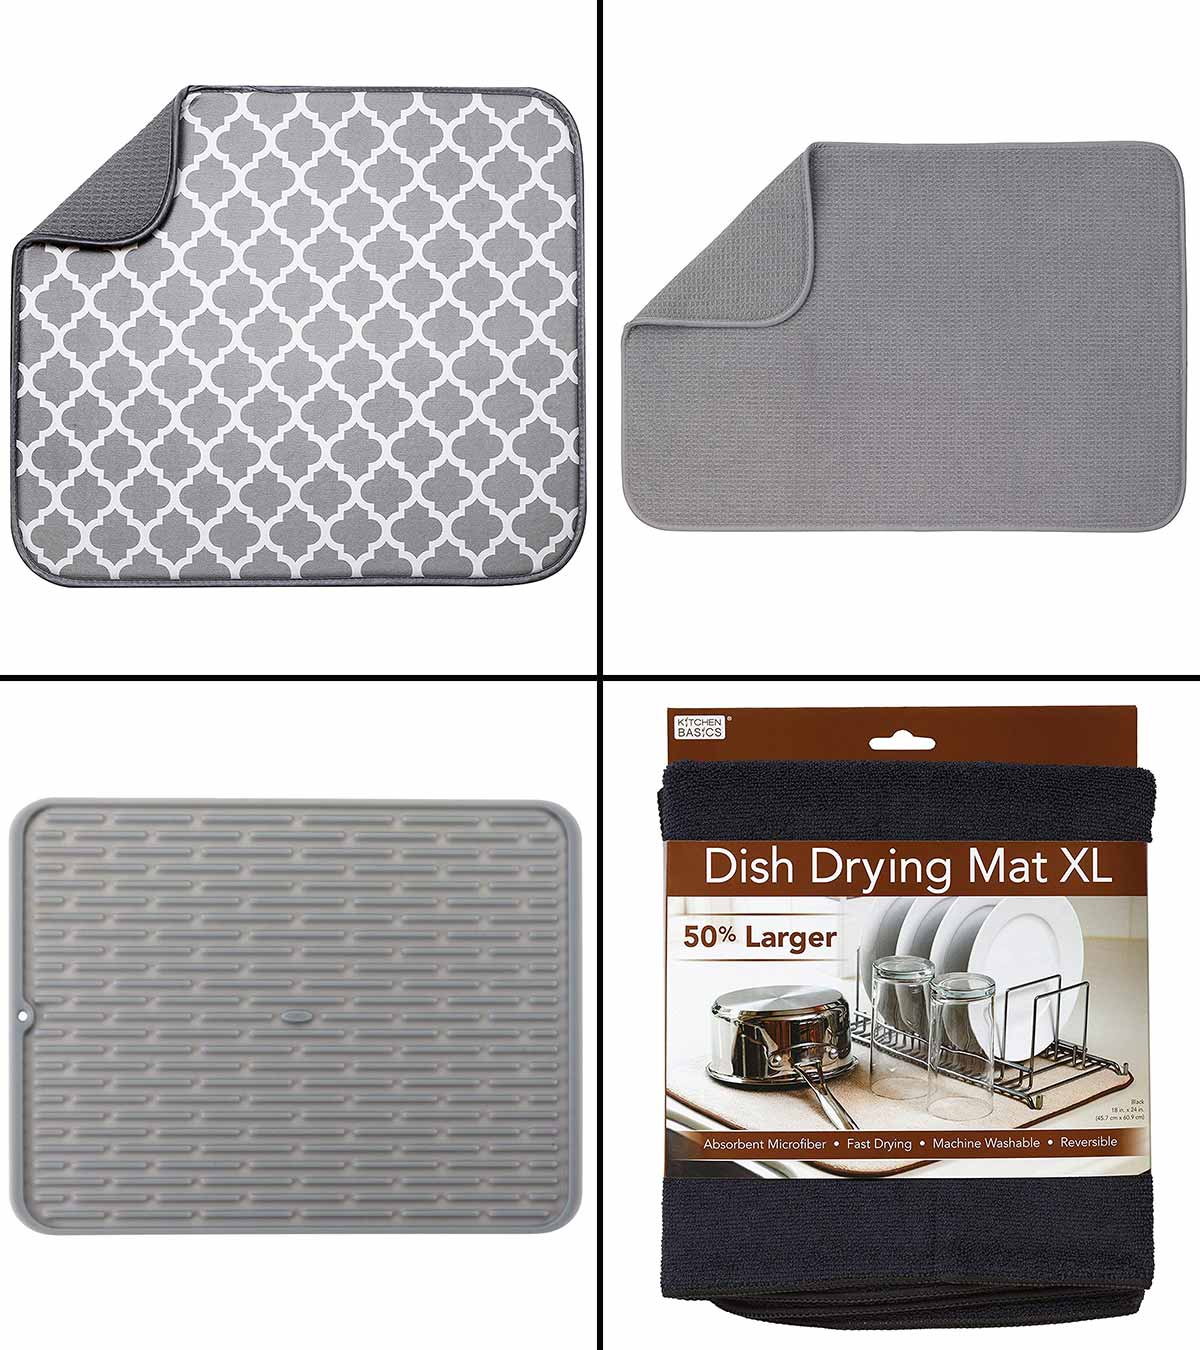 https://www.momjunction.com/wp-content/uploads/2020/10/15-Best-Dish-Drying-Mats-To-Buy-In-20201-1.jpg